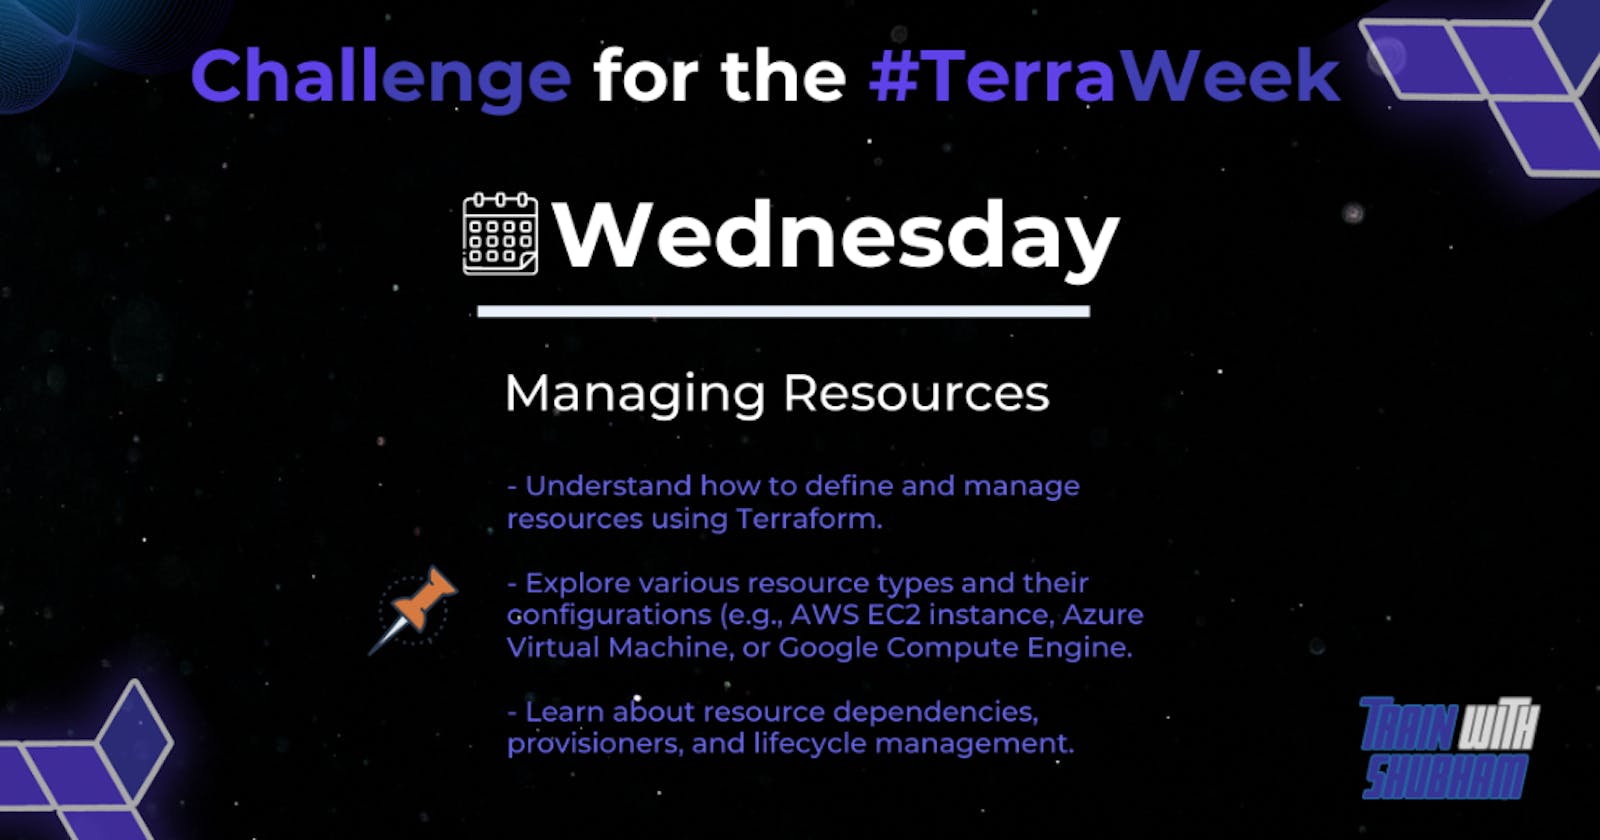 Day 3 : TWS Terra Week CHALLENGE